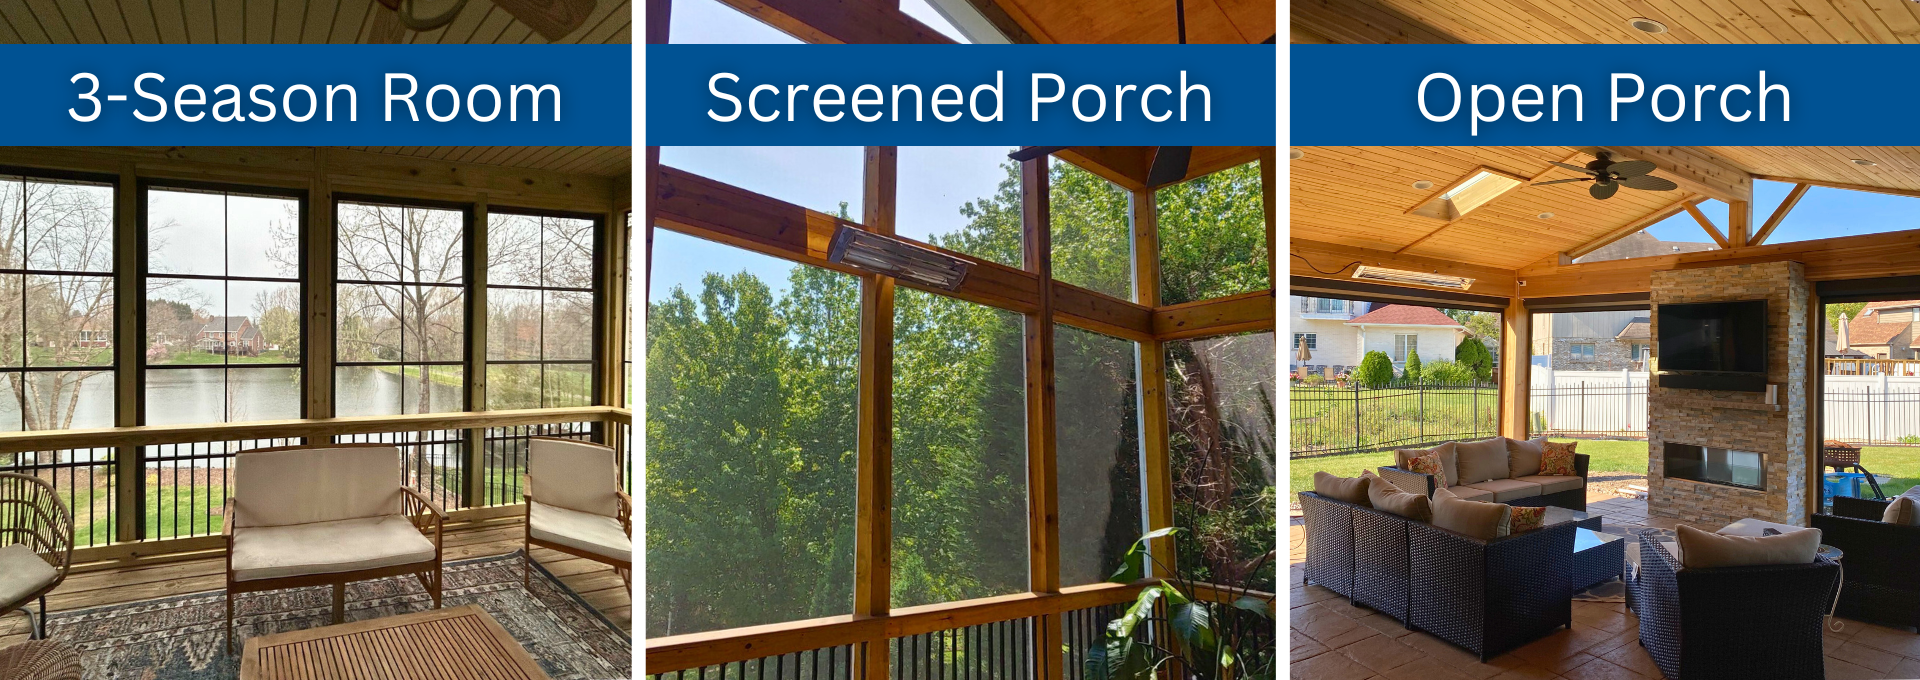 3 season room, screened porch, open porch